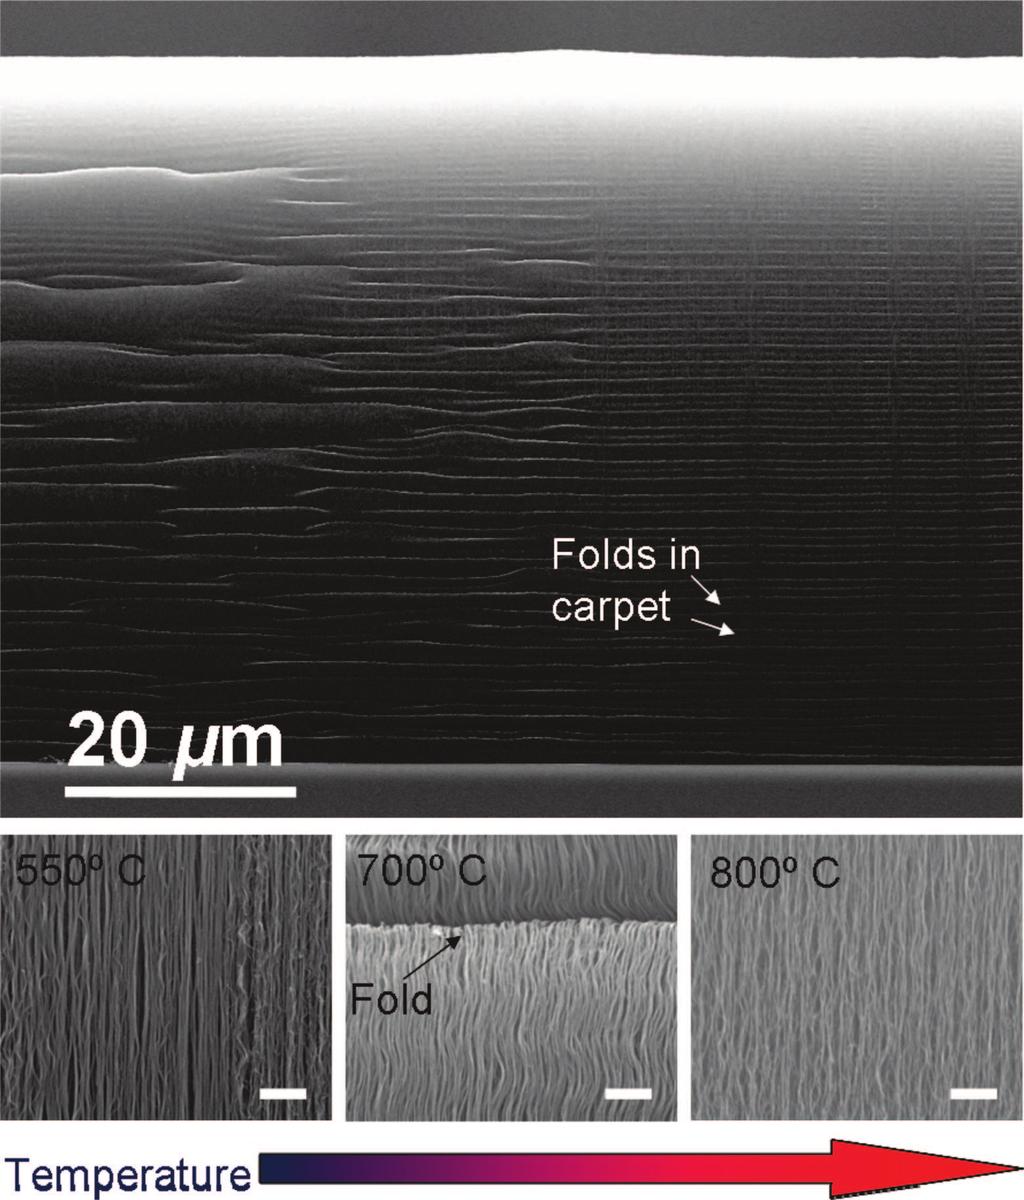 14044 J. Phys. Chem. C, Vol. 112, No. 36, 2008 Pint et al. Figure 3. Side-view scanning electron microscopy (SEM) image of a carpet grown from 1 Å Mo deposited on 5 Å Fe at 700 C.